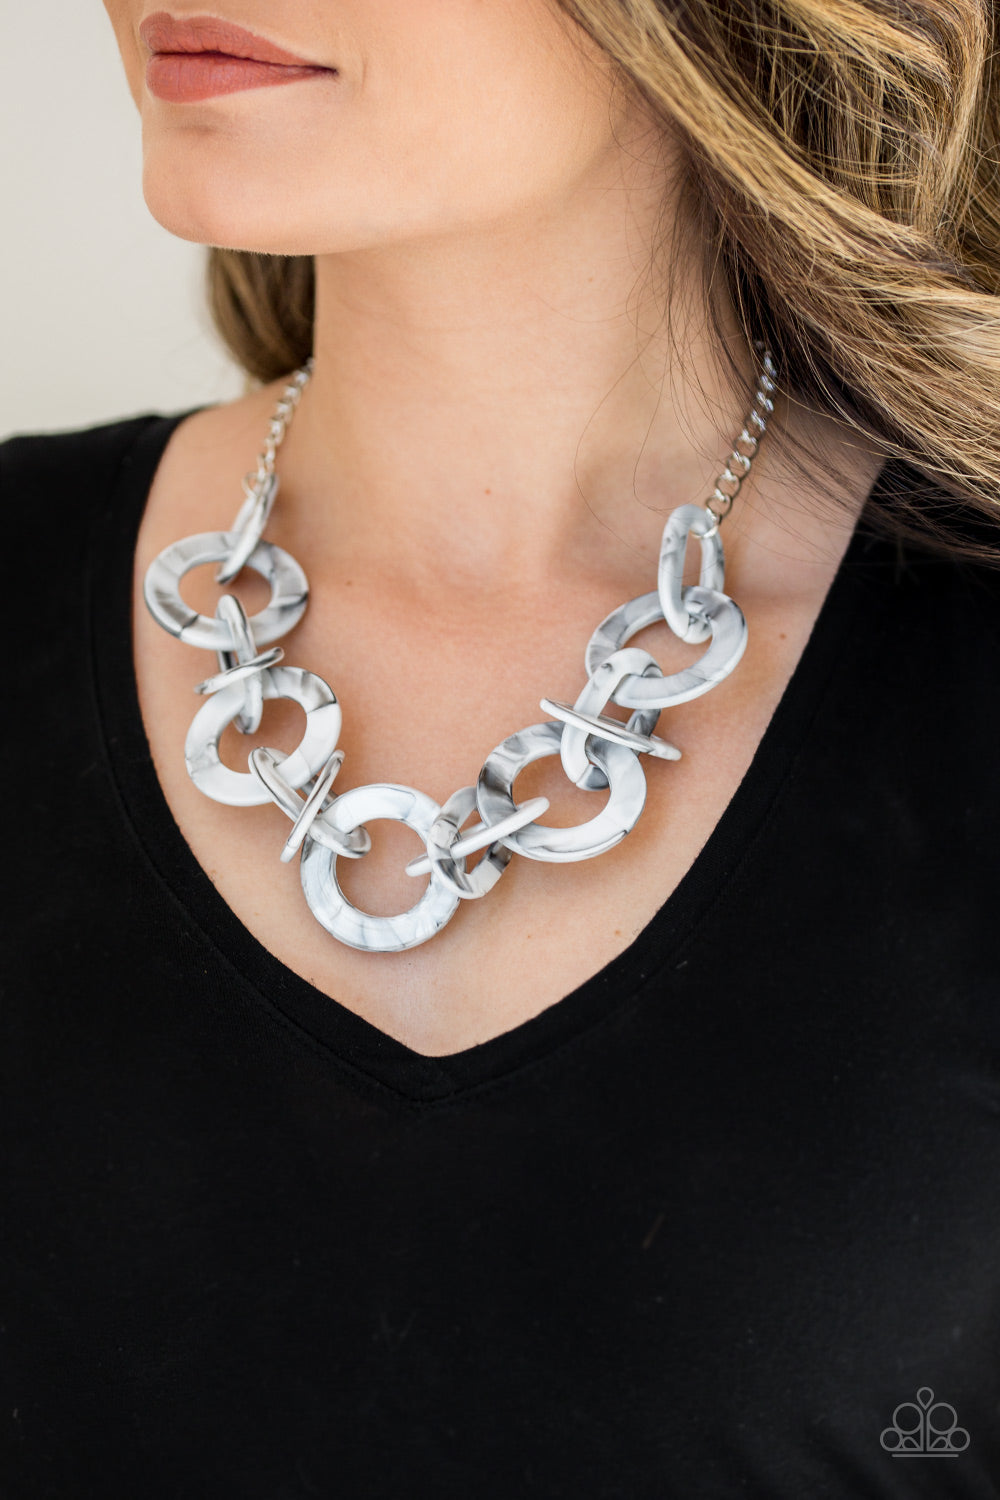 Chromatic Charm - Silver acrylic necklace